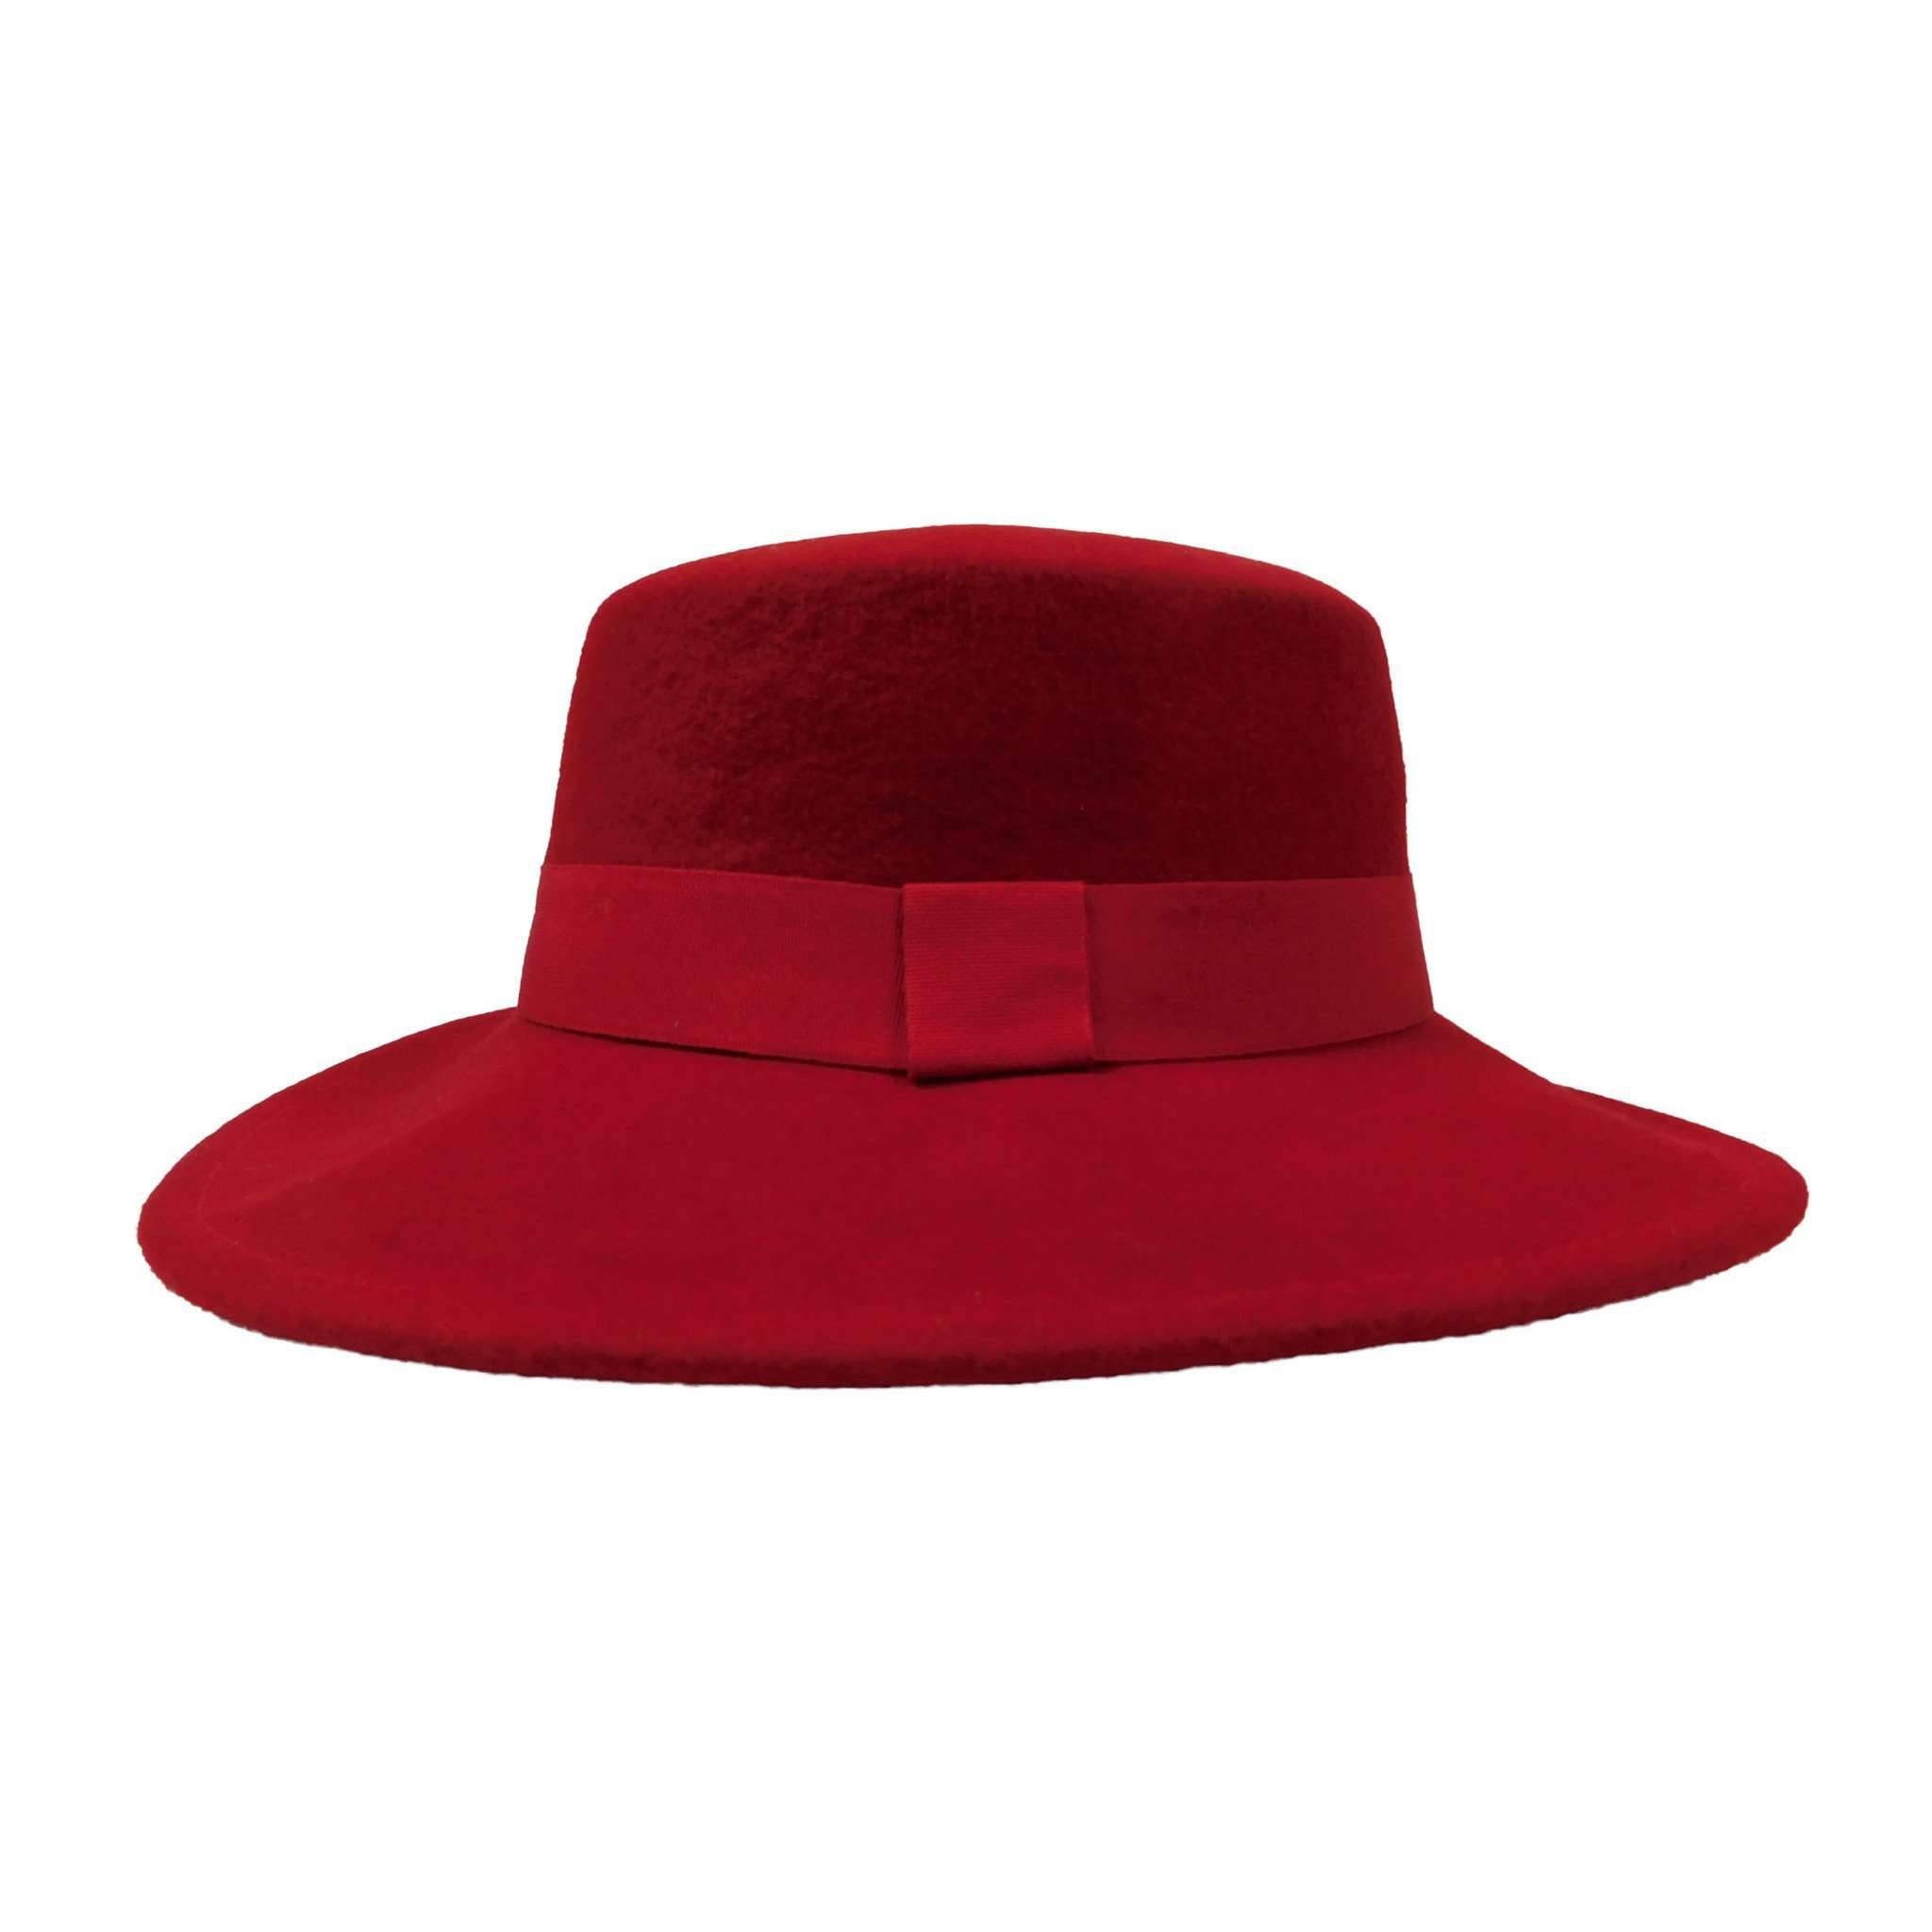 Red Wool Felt Bolero Hat - JSA for Women Bolero Hat Jeanne Simmons js7162RD Red Medium (22.25") 